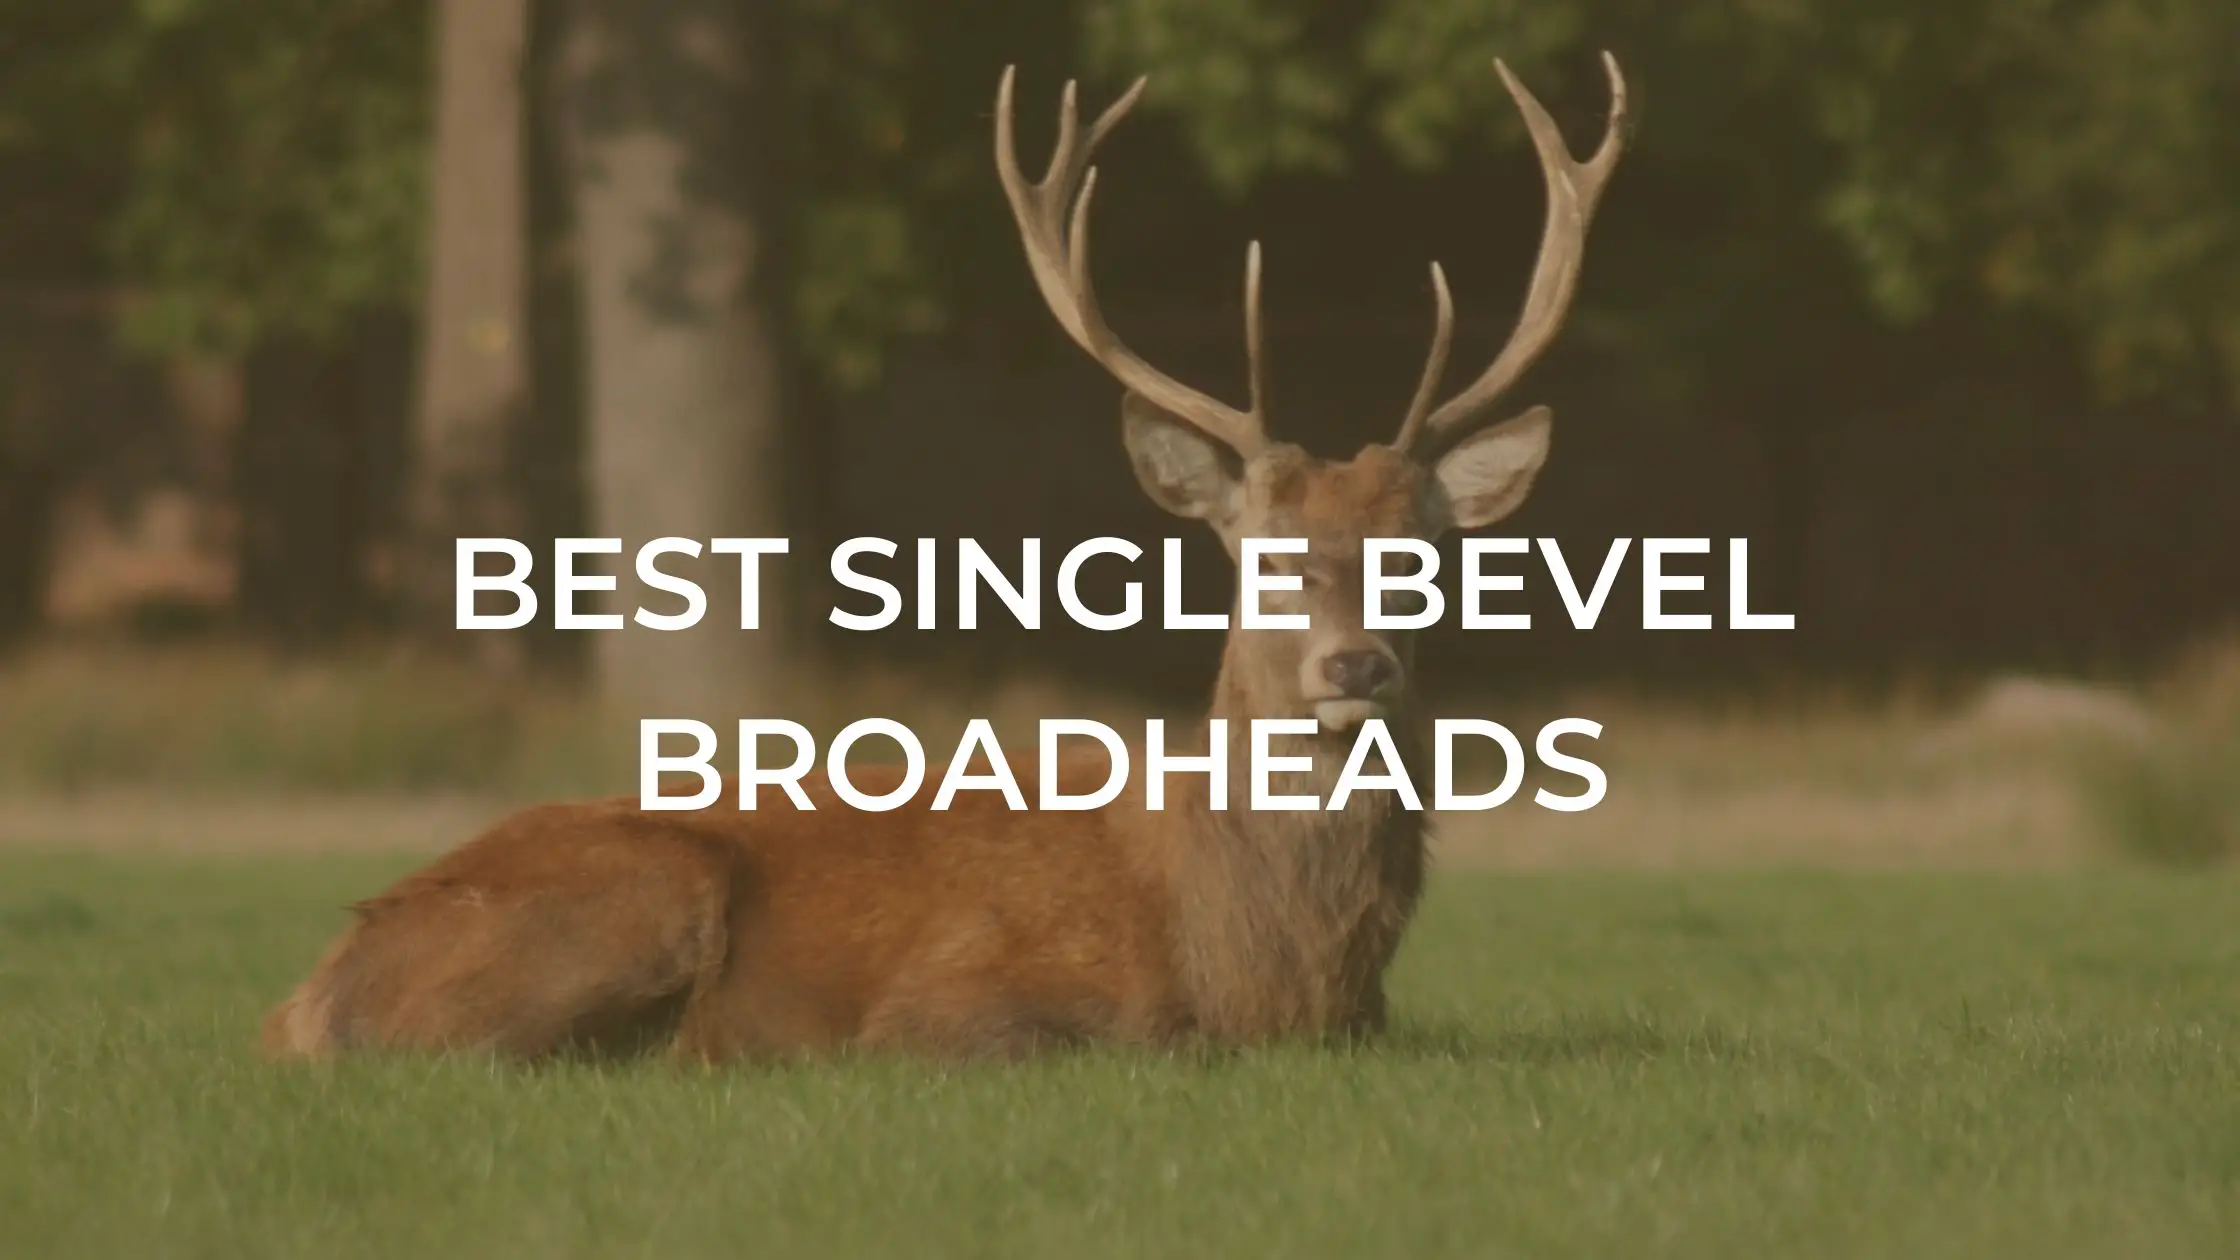 Best Single Bevel Broadheads